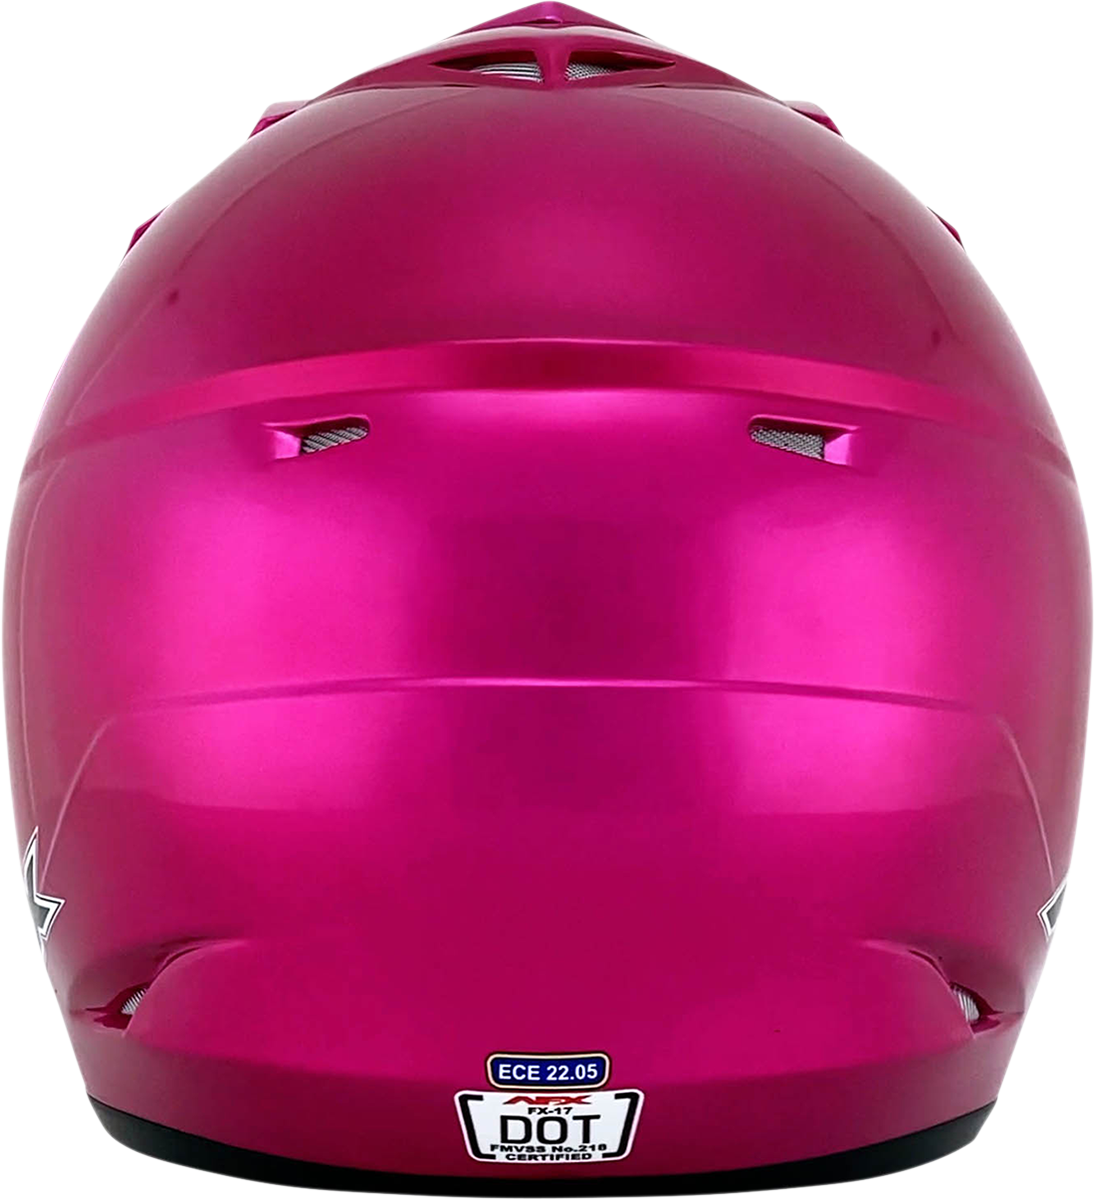 AFX FX-17 Helmet - Fuchsia - Small 0110-4076